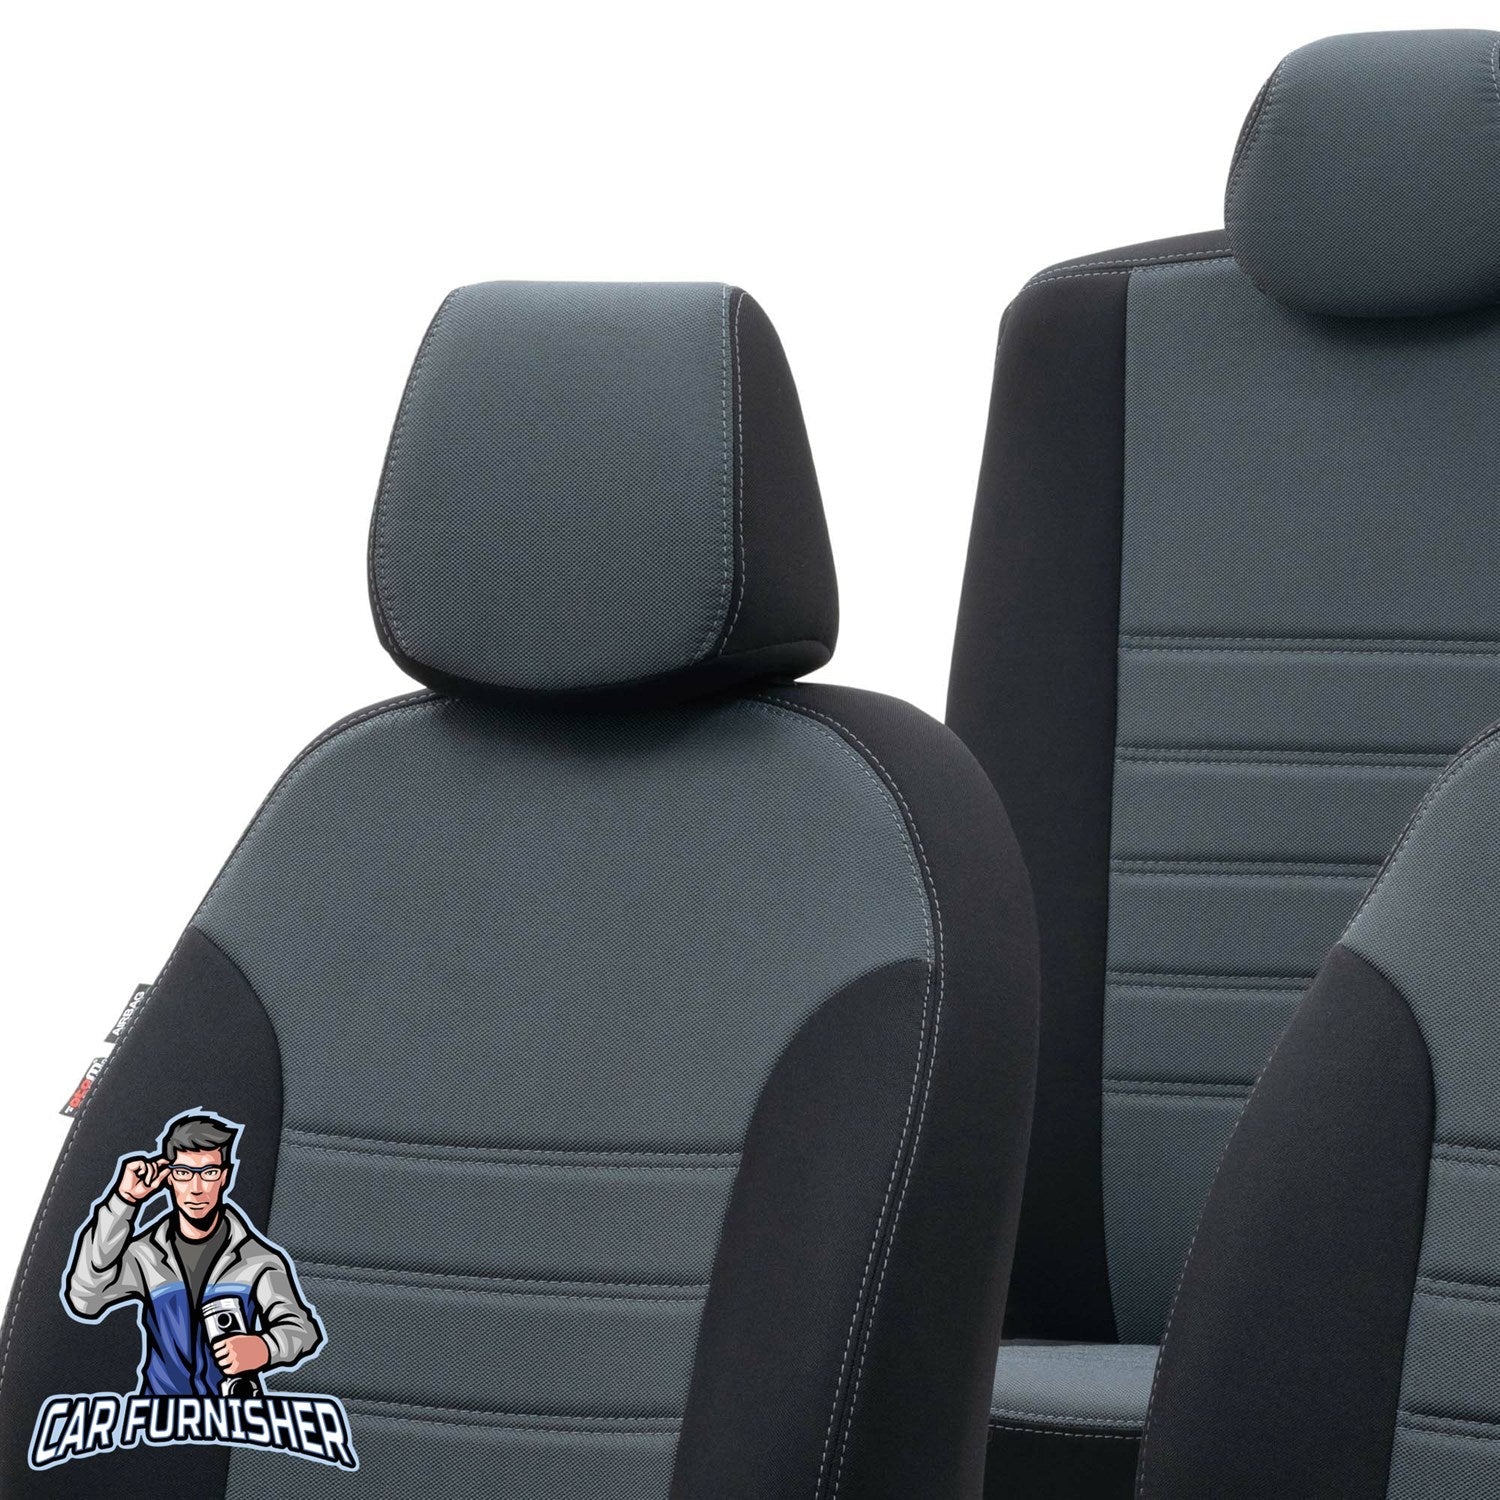 Tata Xenon Seat Covers Original Jacquard Design Smoked Black Jacquard Fabric